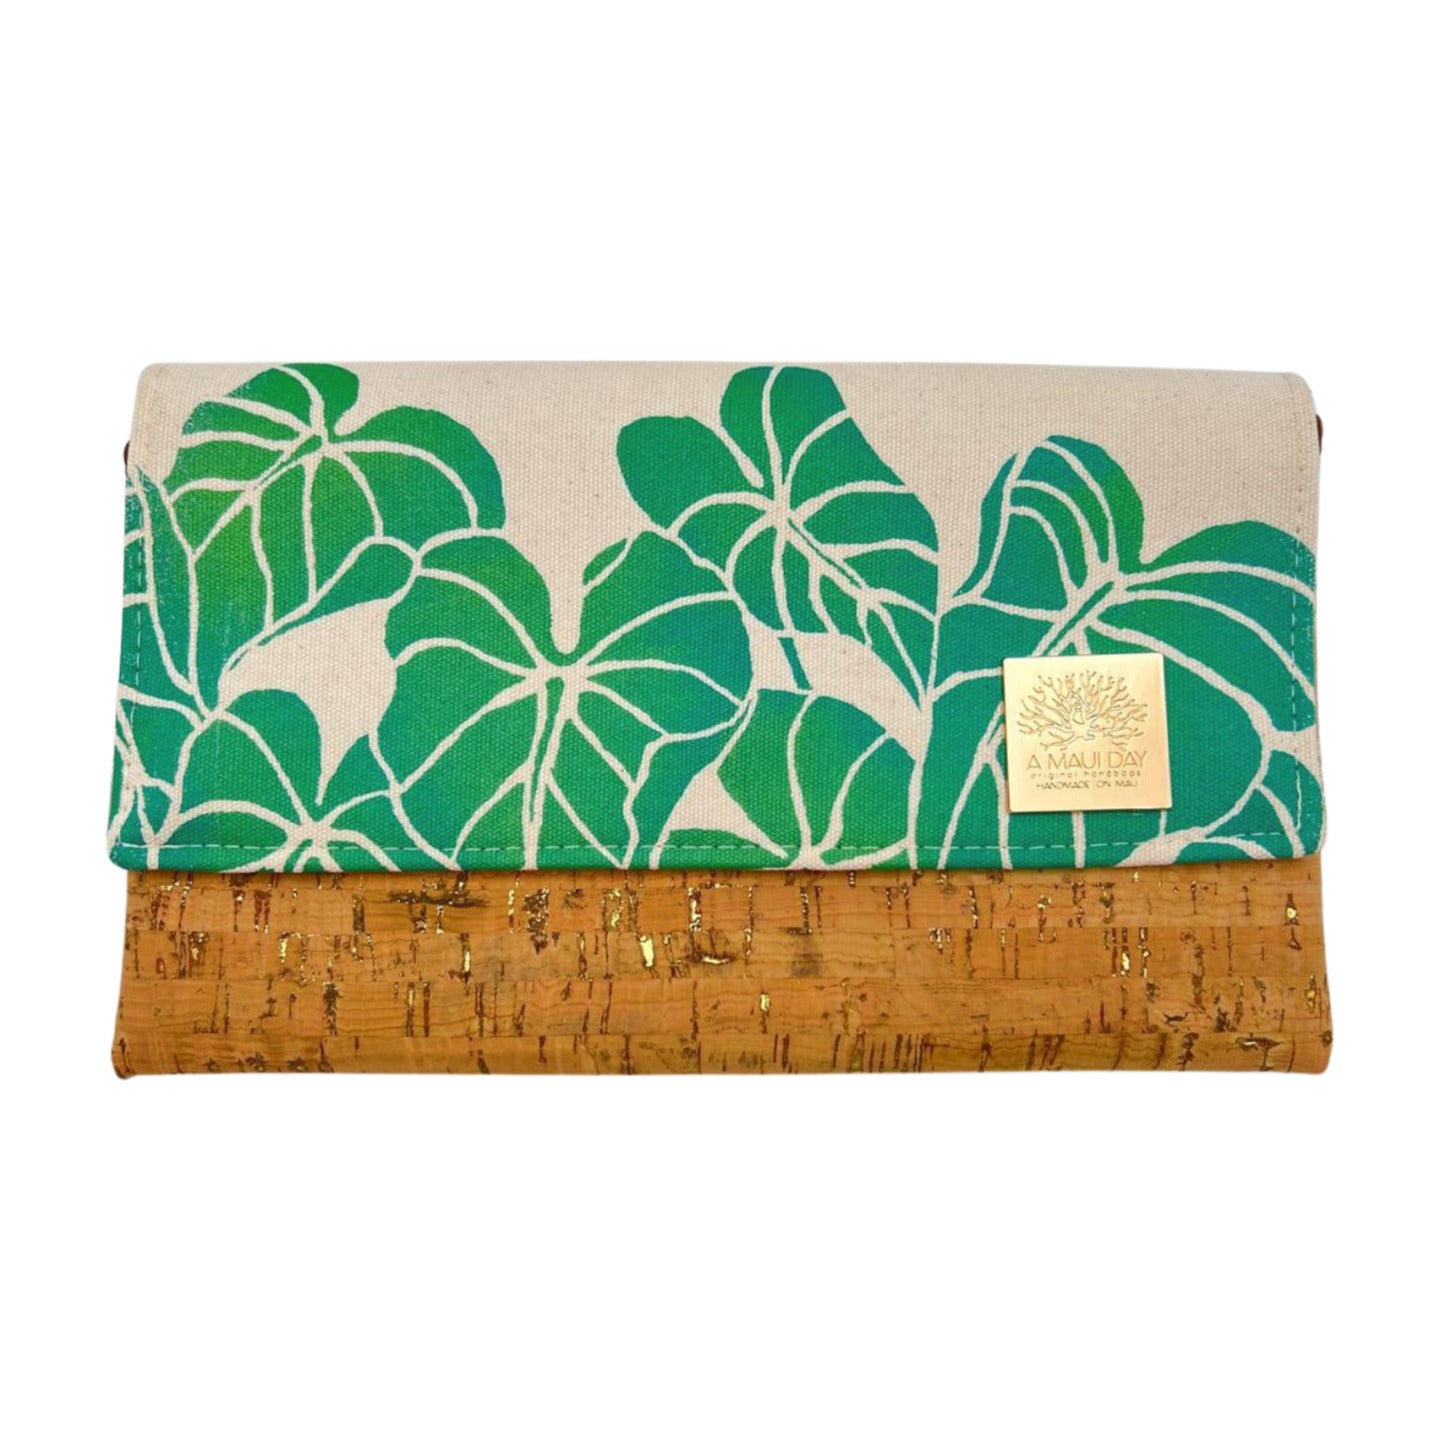 Pop-Up Mākeke - A Maui Day Original Handbags - Handprinted Fold-Over Handbag - Green Kalo on Canvas - Front View - Front View